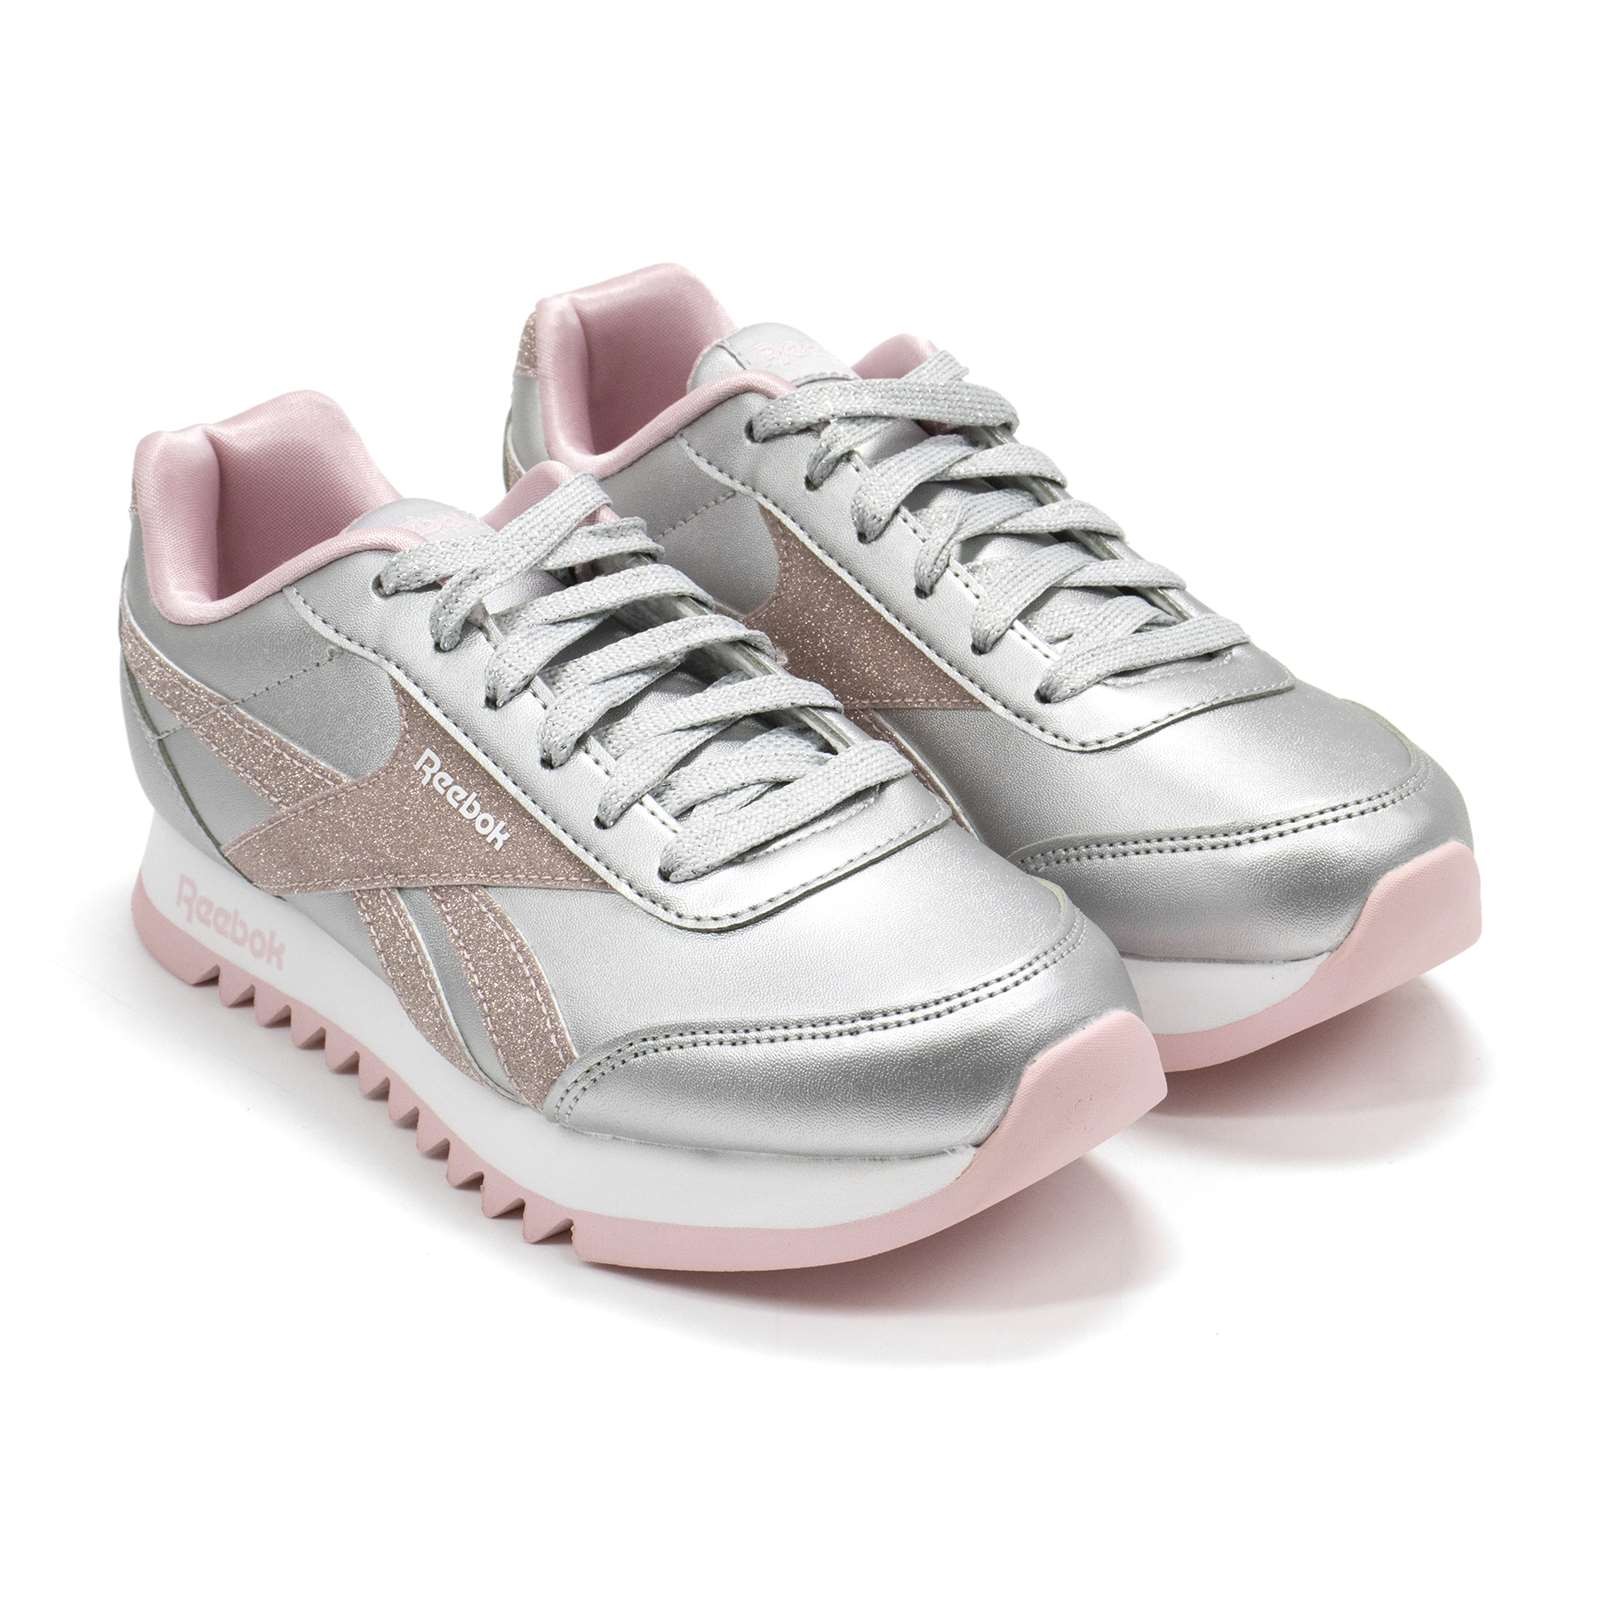 Taiko buik Opstand Mm Reebok Girls Royal Classic Jogger 2.0 Platform Sneaker